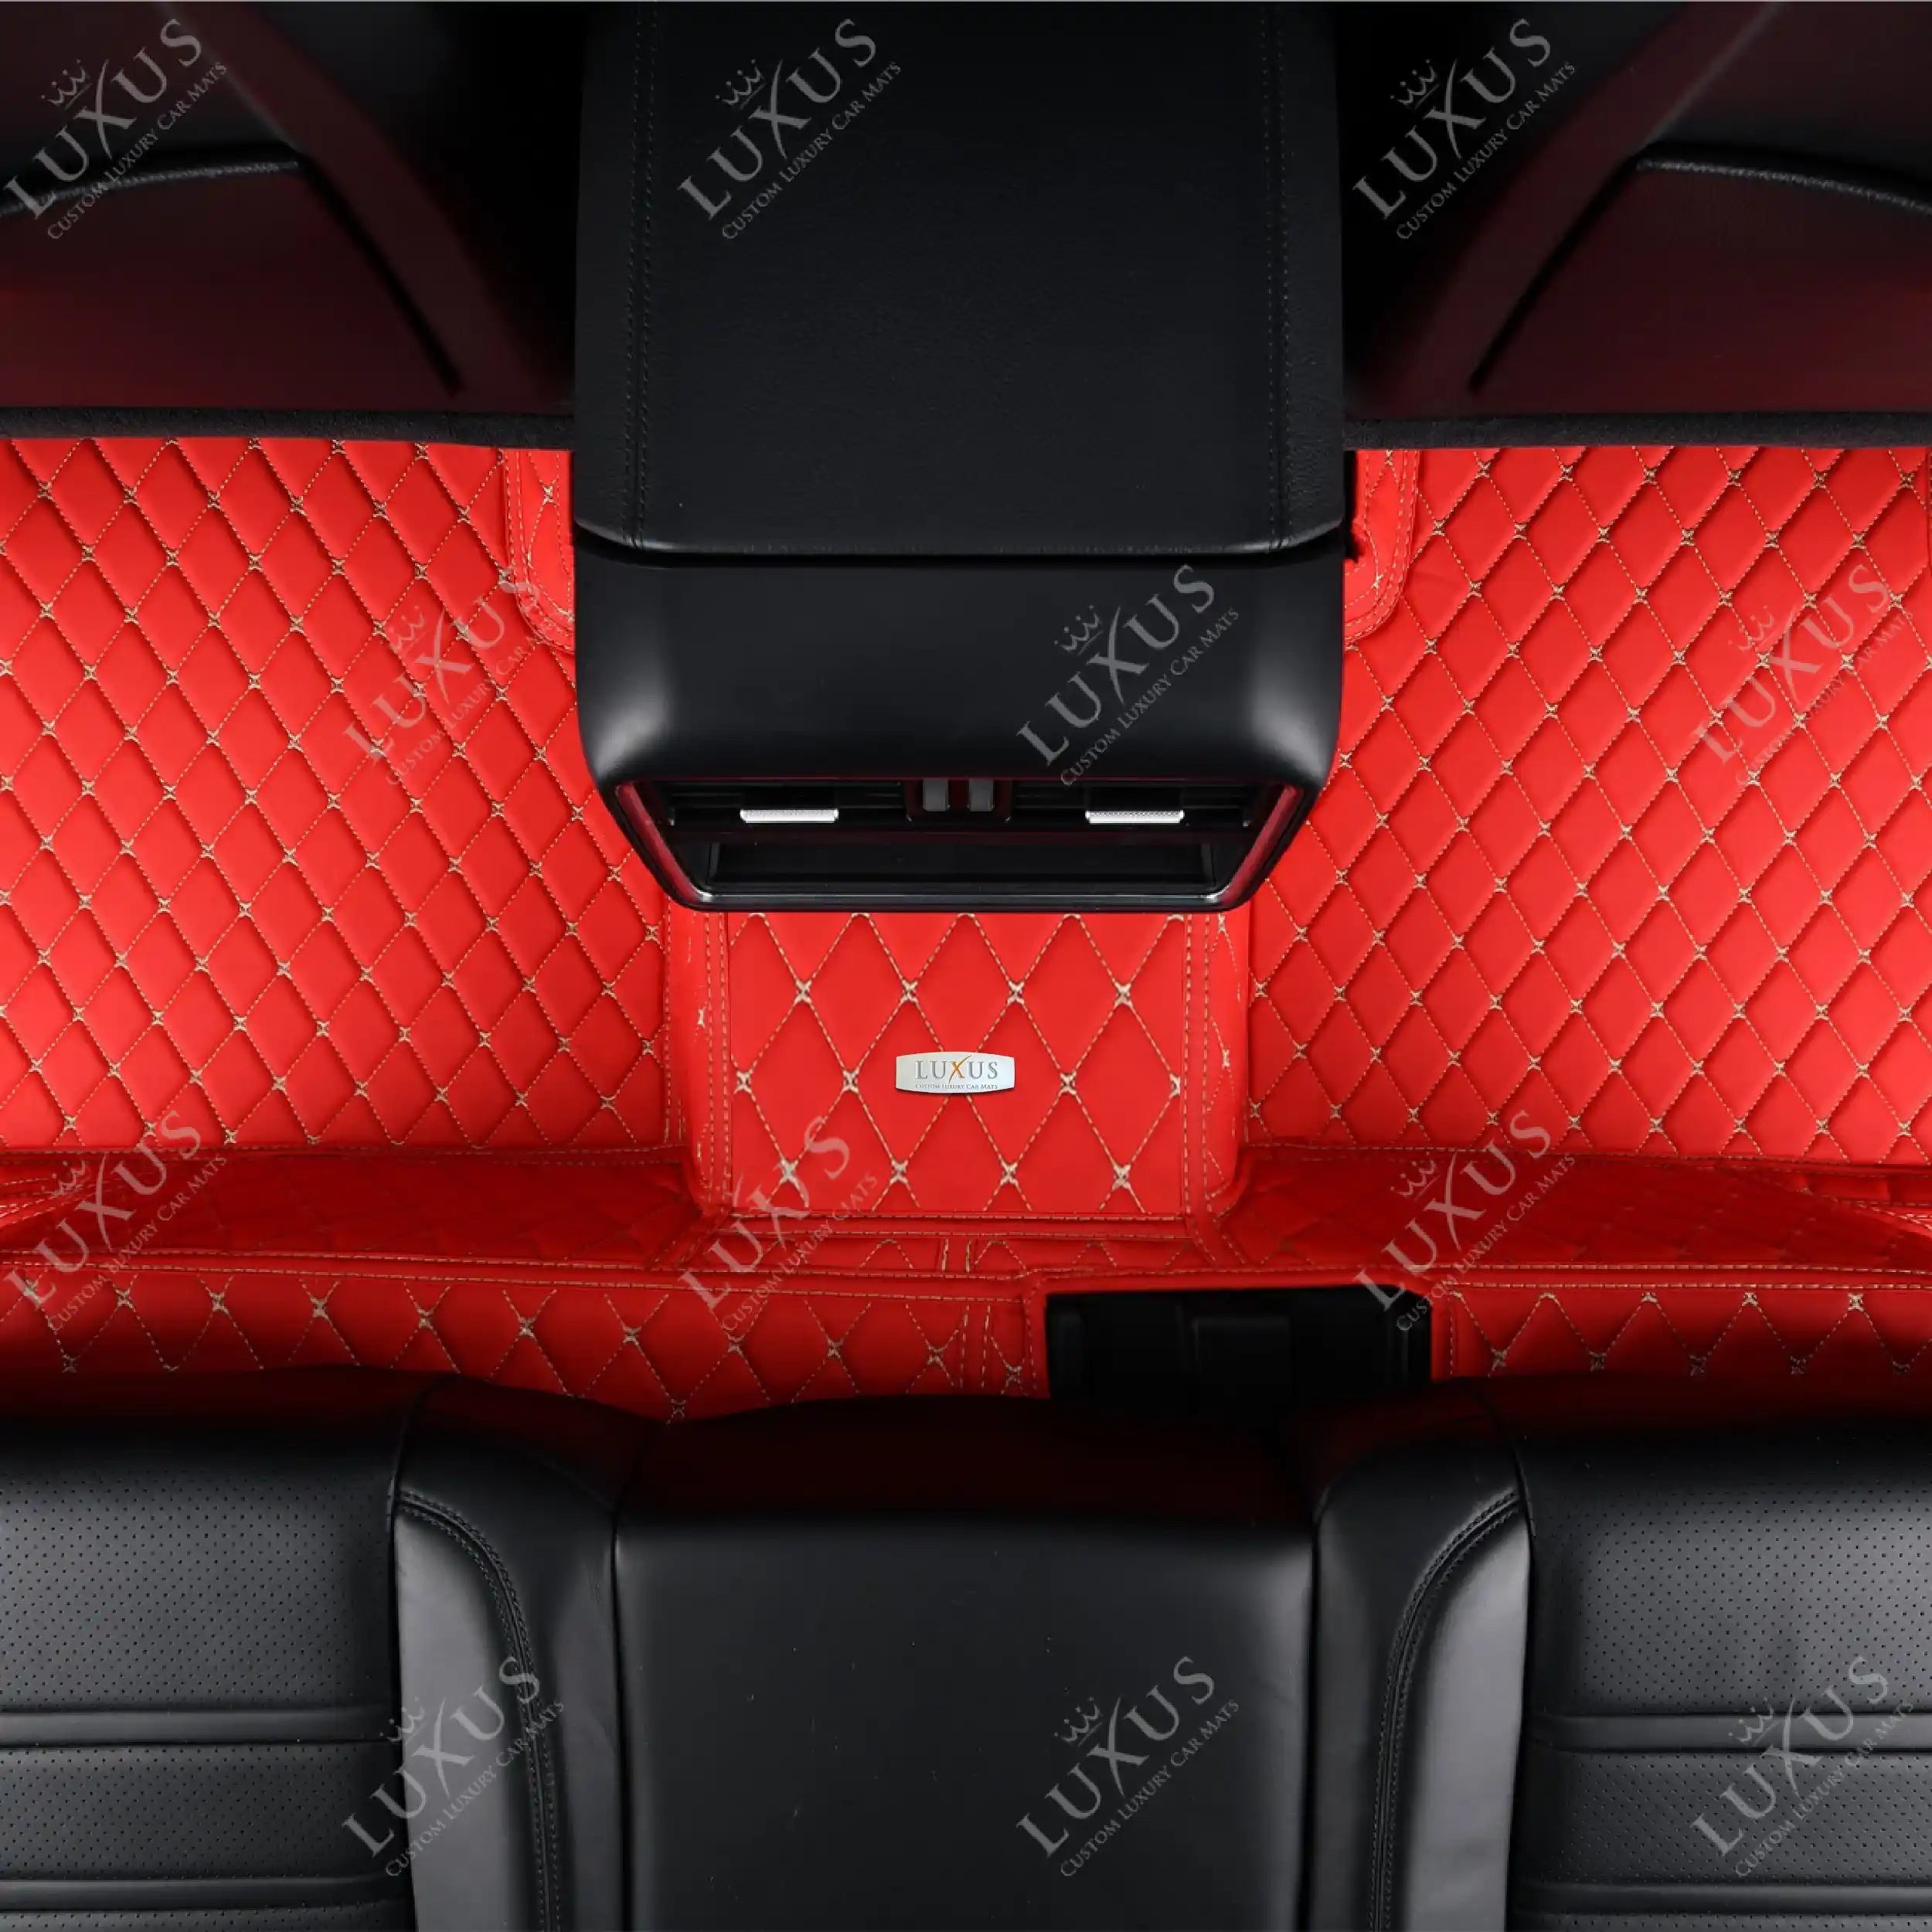 Louis Vuitton pink car mat car accessories set $280 Orders